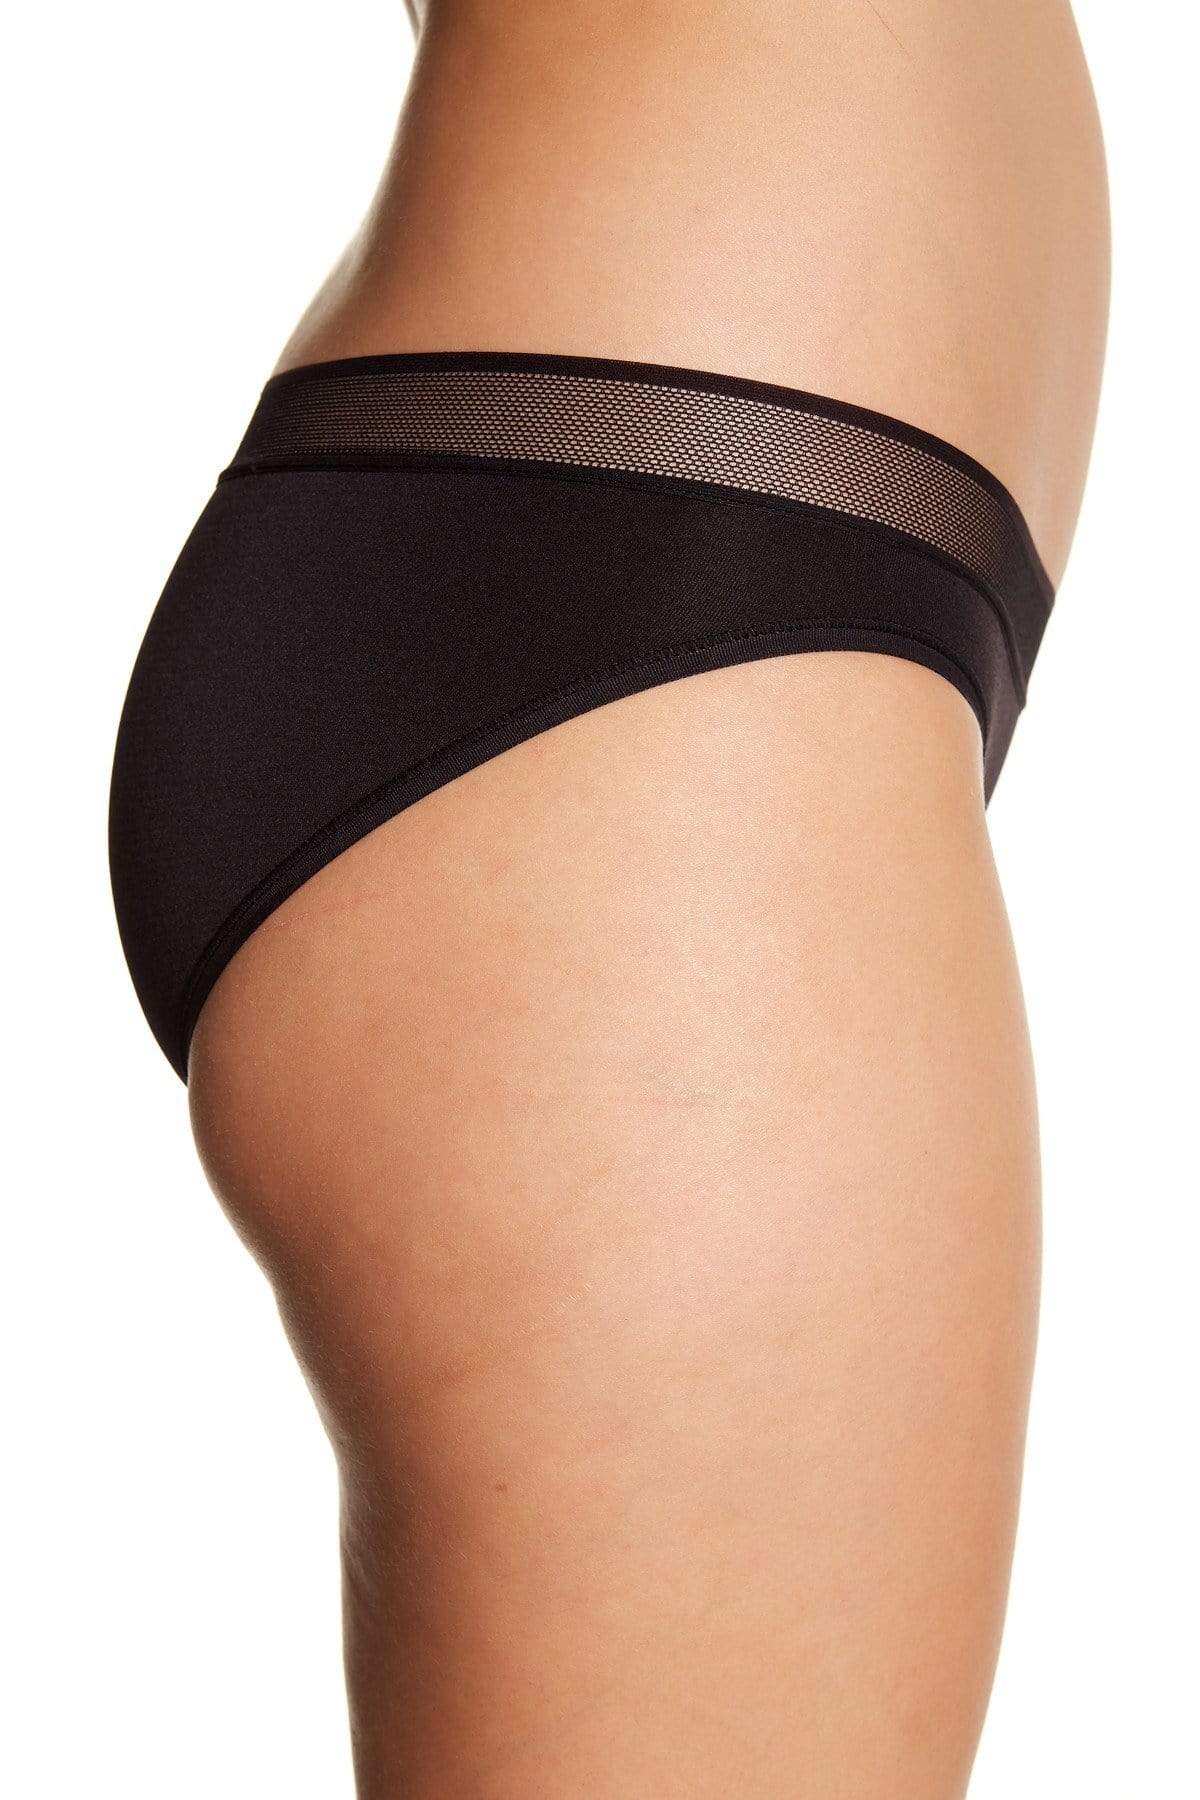 DKNY womens underwear Medium / Black Mesh Trim Panties